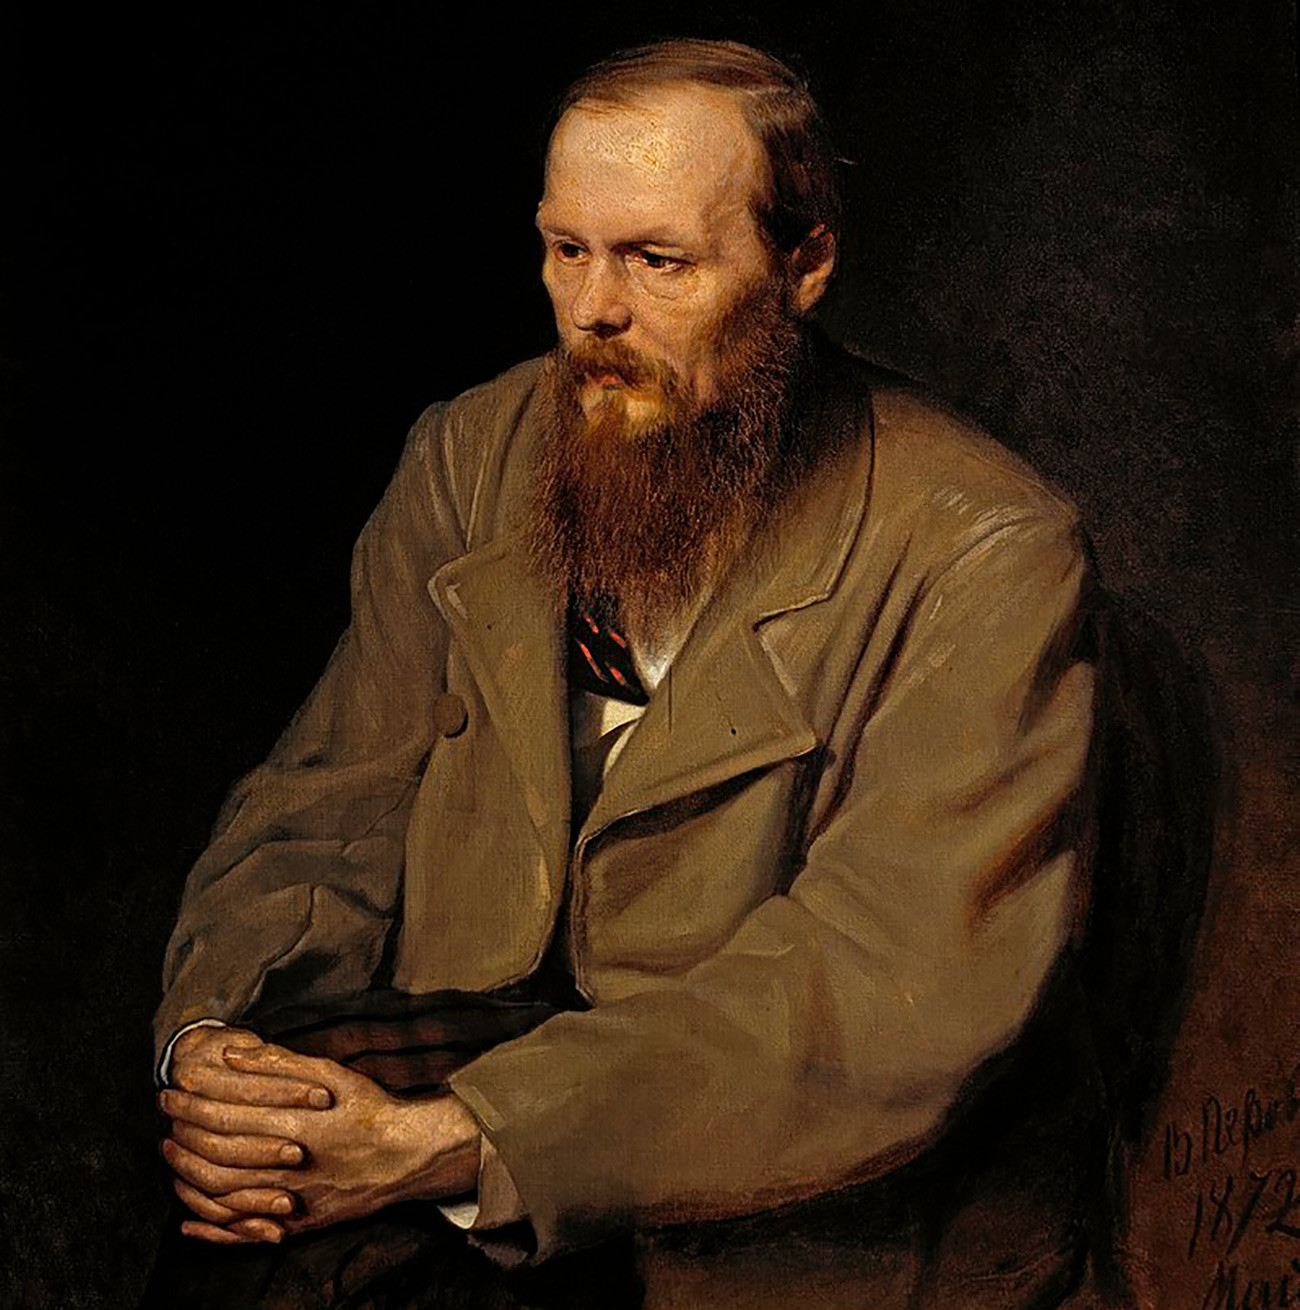 Porträt von Fjodor Dostojewski